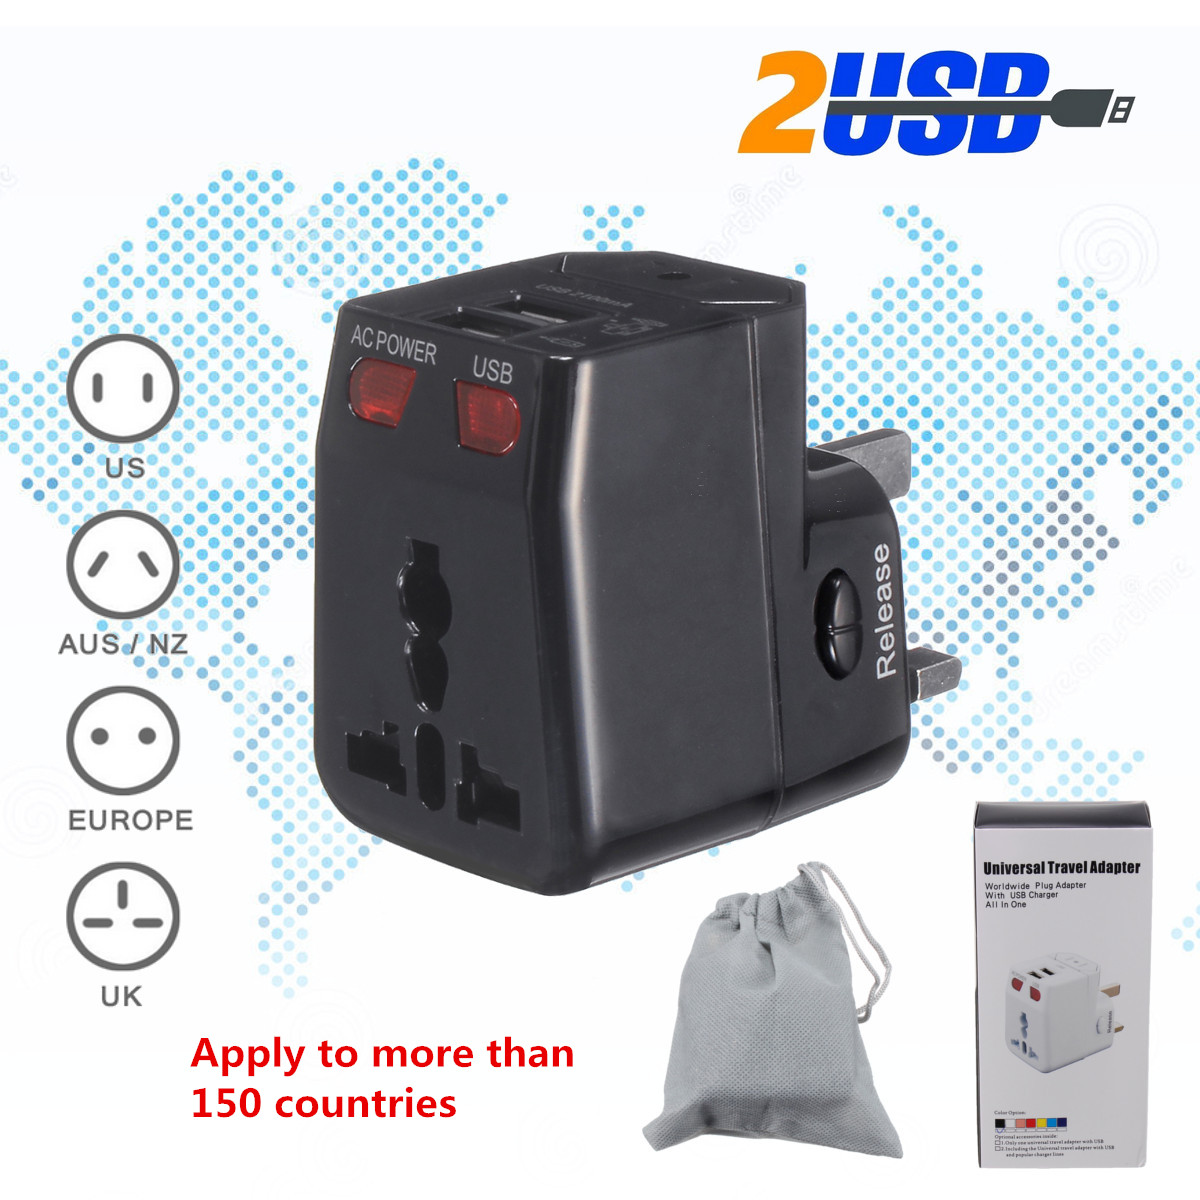 125-250V-USUKAUEU-Universal-World-Travel-Adapter-Plug-Dual-USB-Port-w-Surge-Protector-1286824-1